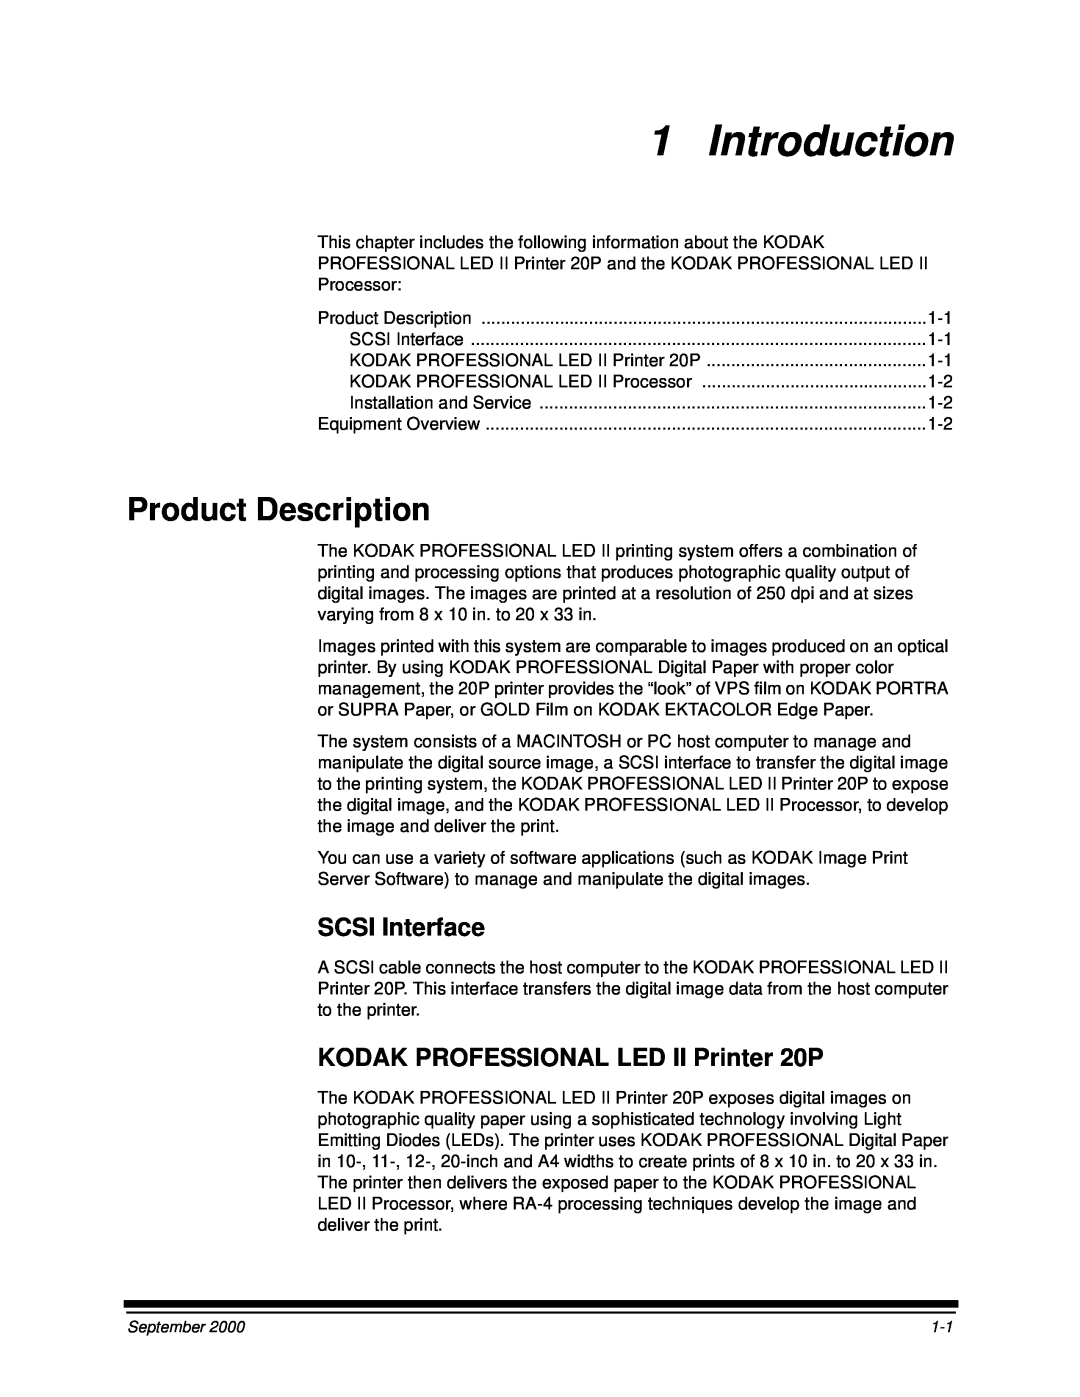 Kodak manual Introduction, Product Description, SCSI Interface, KODAK PROFESSIONAL LED II Printer 20P 